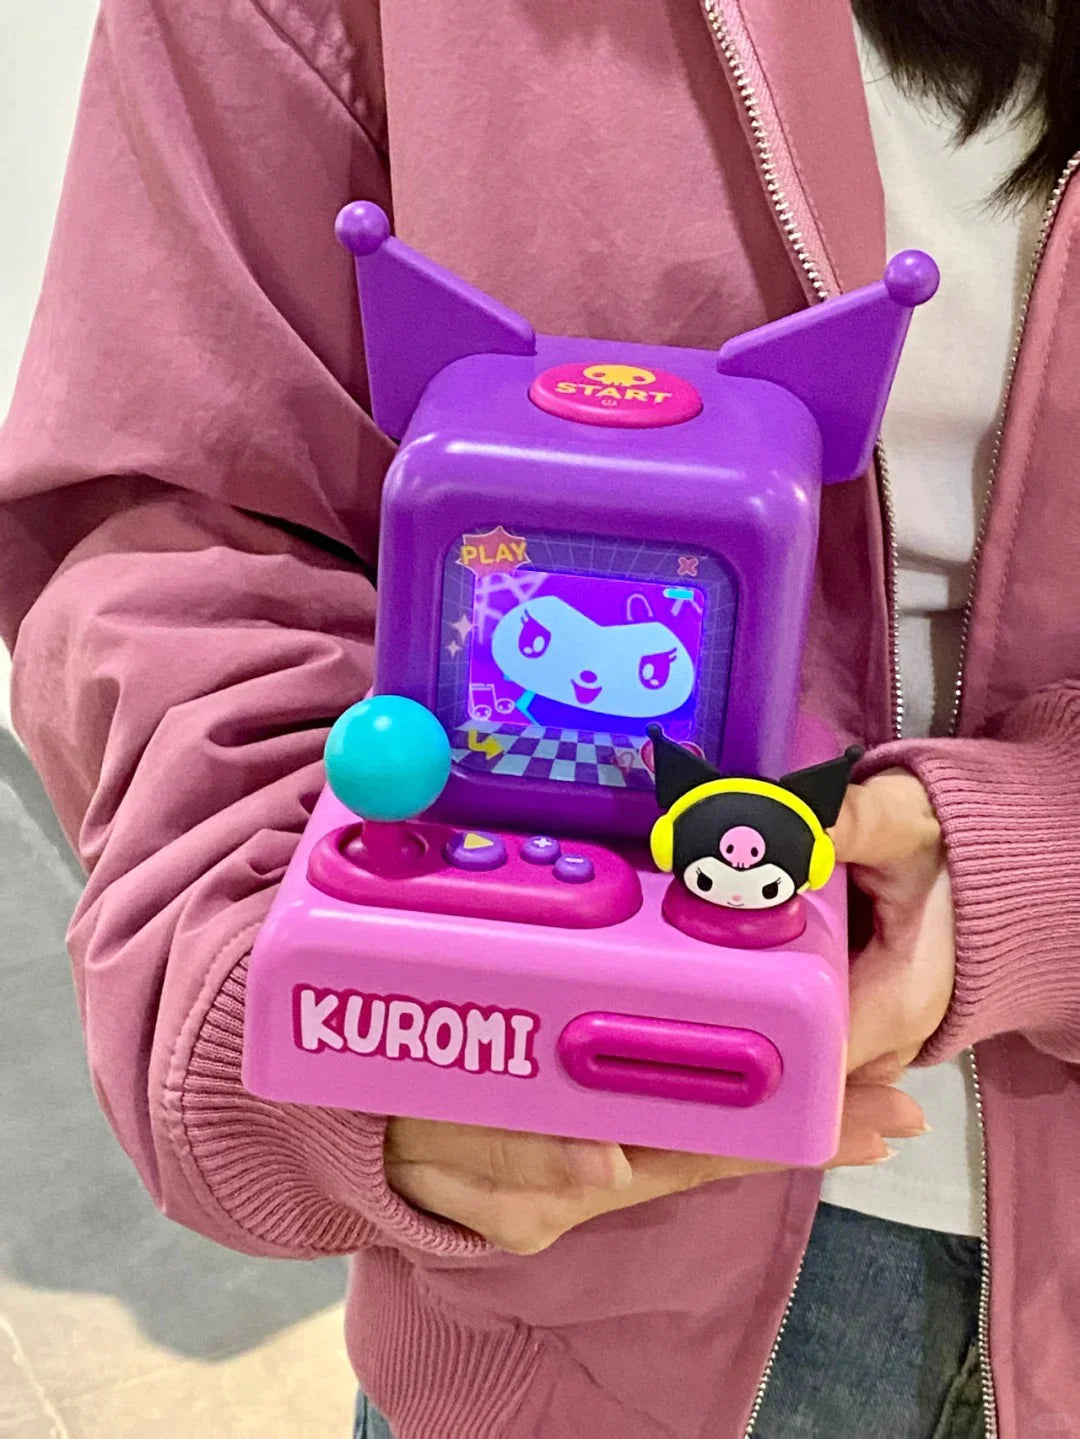 Kuromi Gaming Console Bluetooth Speaker